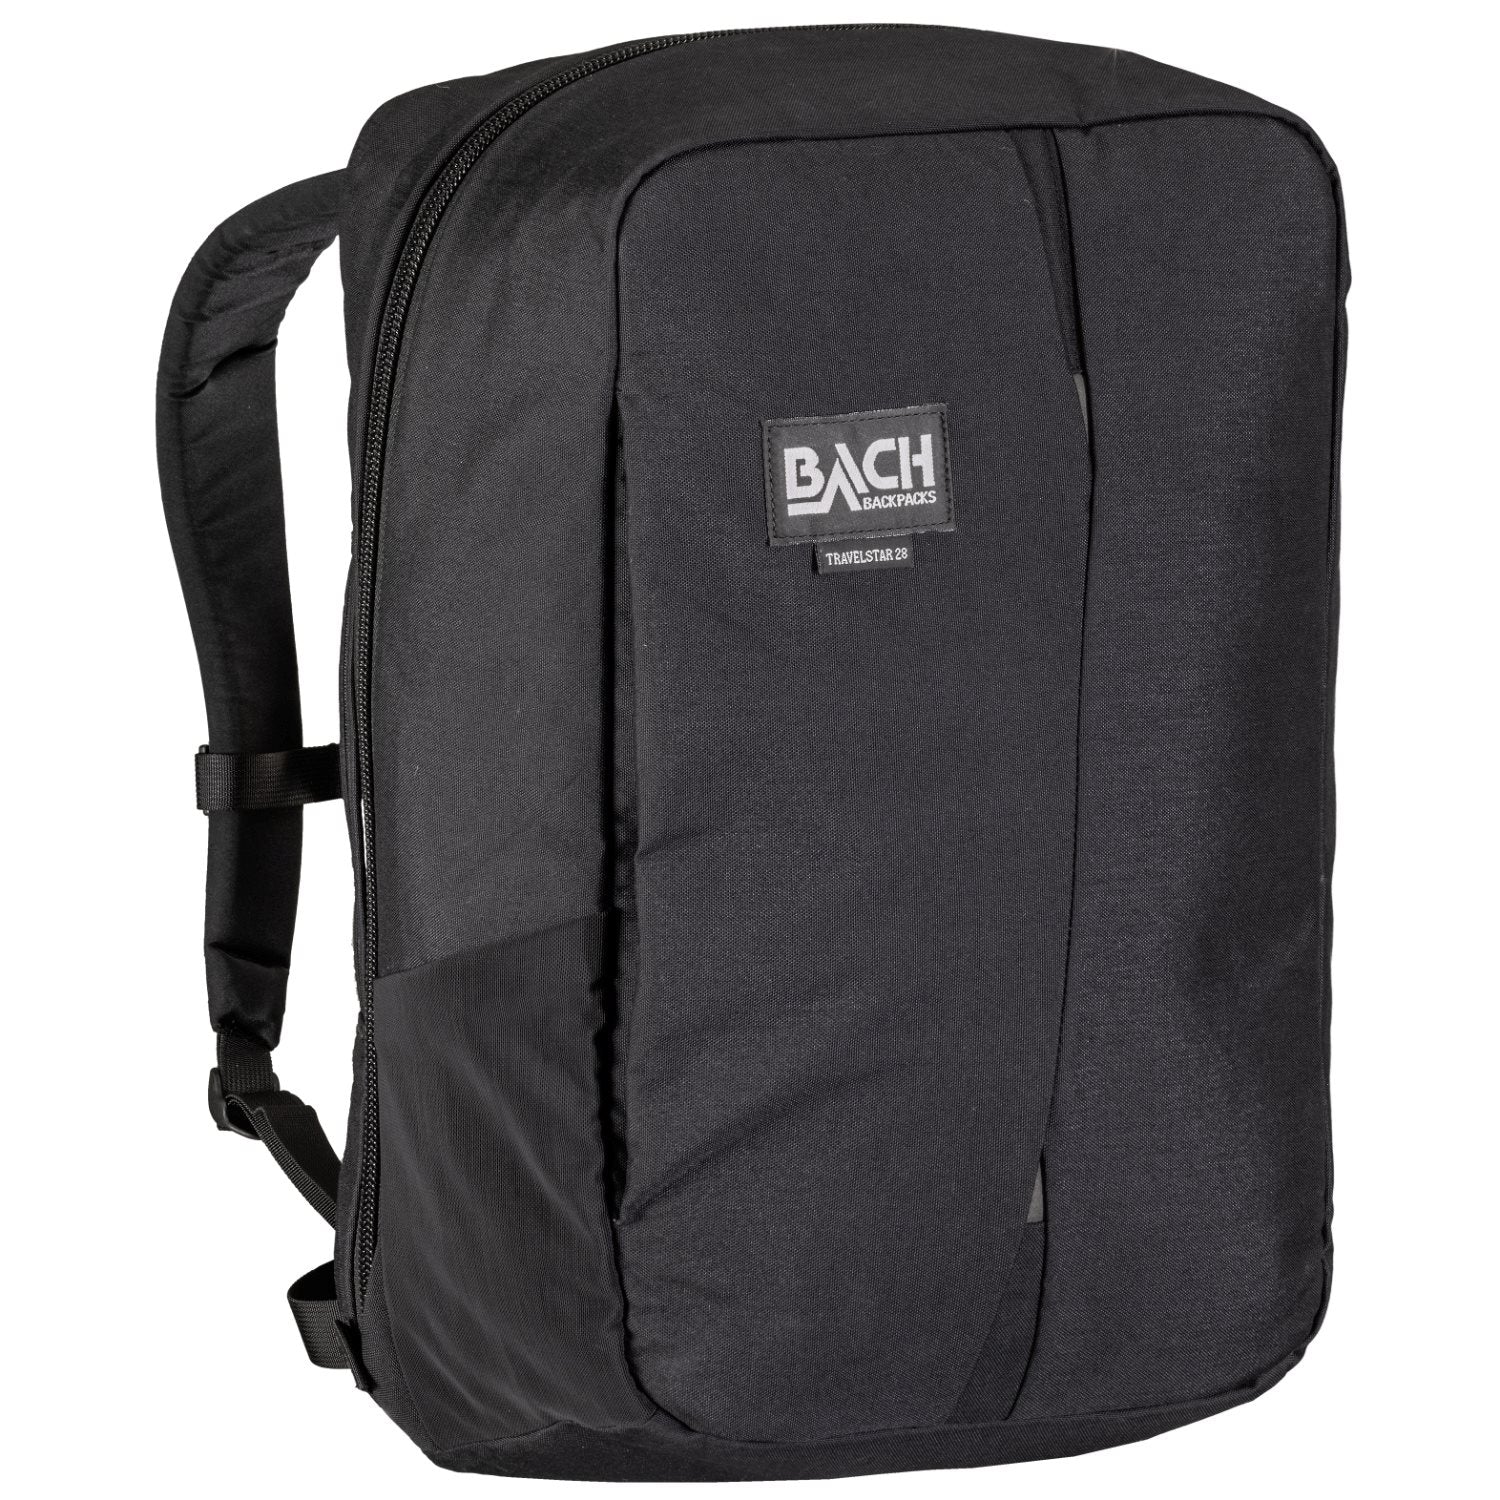 Bach Travelstar - Laptoprugzak - 28L - Black Rugzak - Reisartikelen-nl